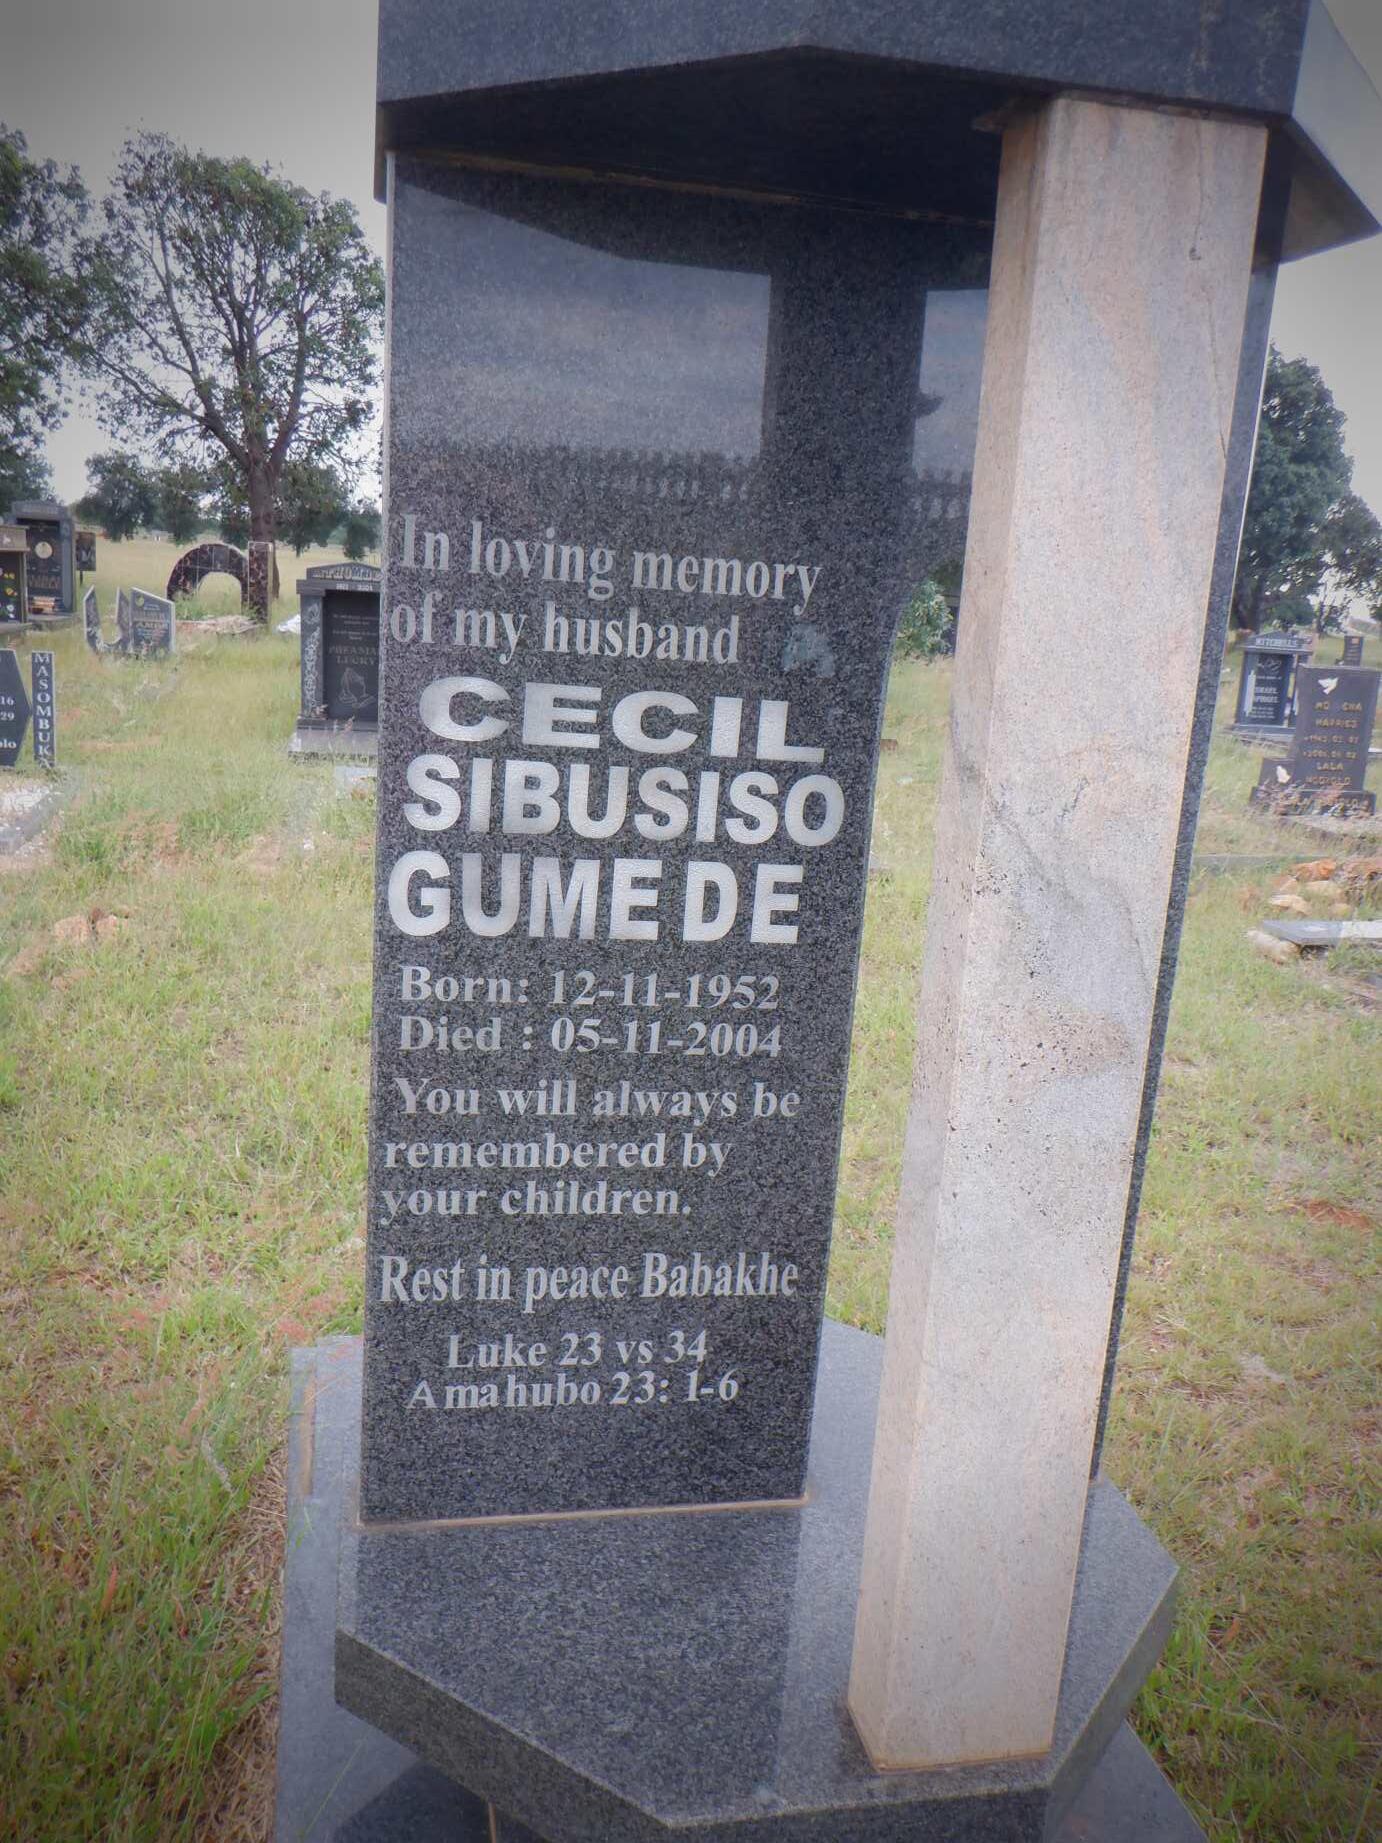 GUMEDE Cecil Sibusiso 1952-2004